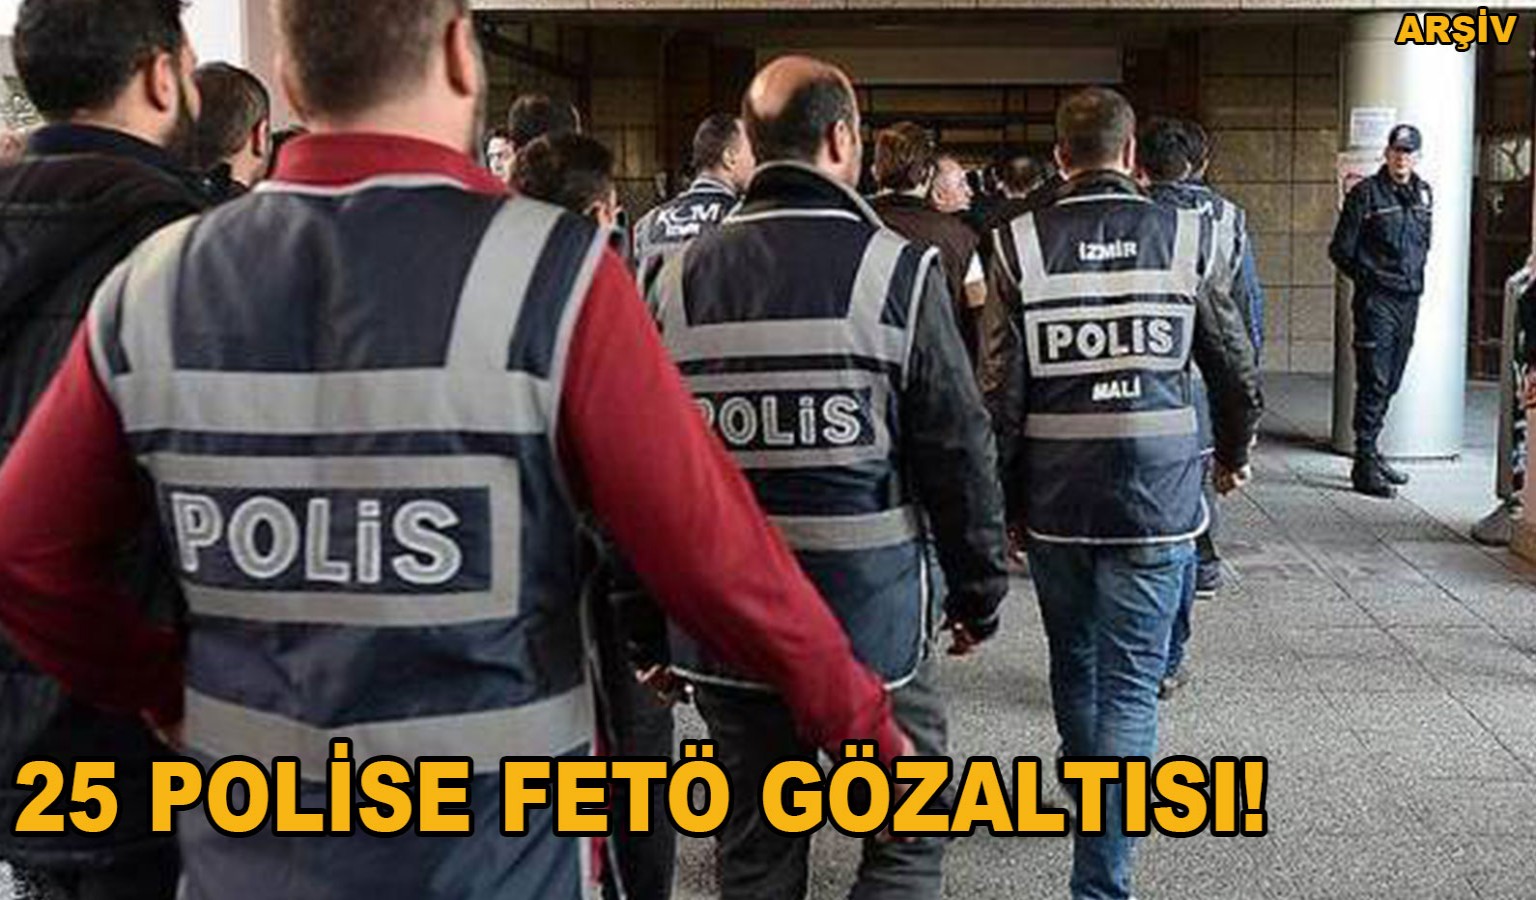 25 POLİSE FETÖ GÖZALTISI!